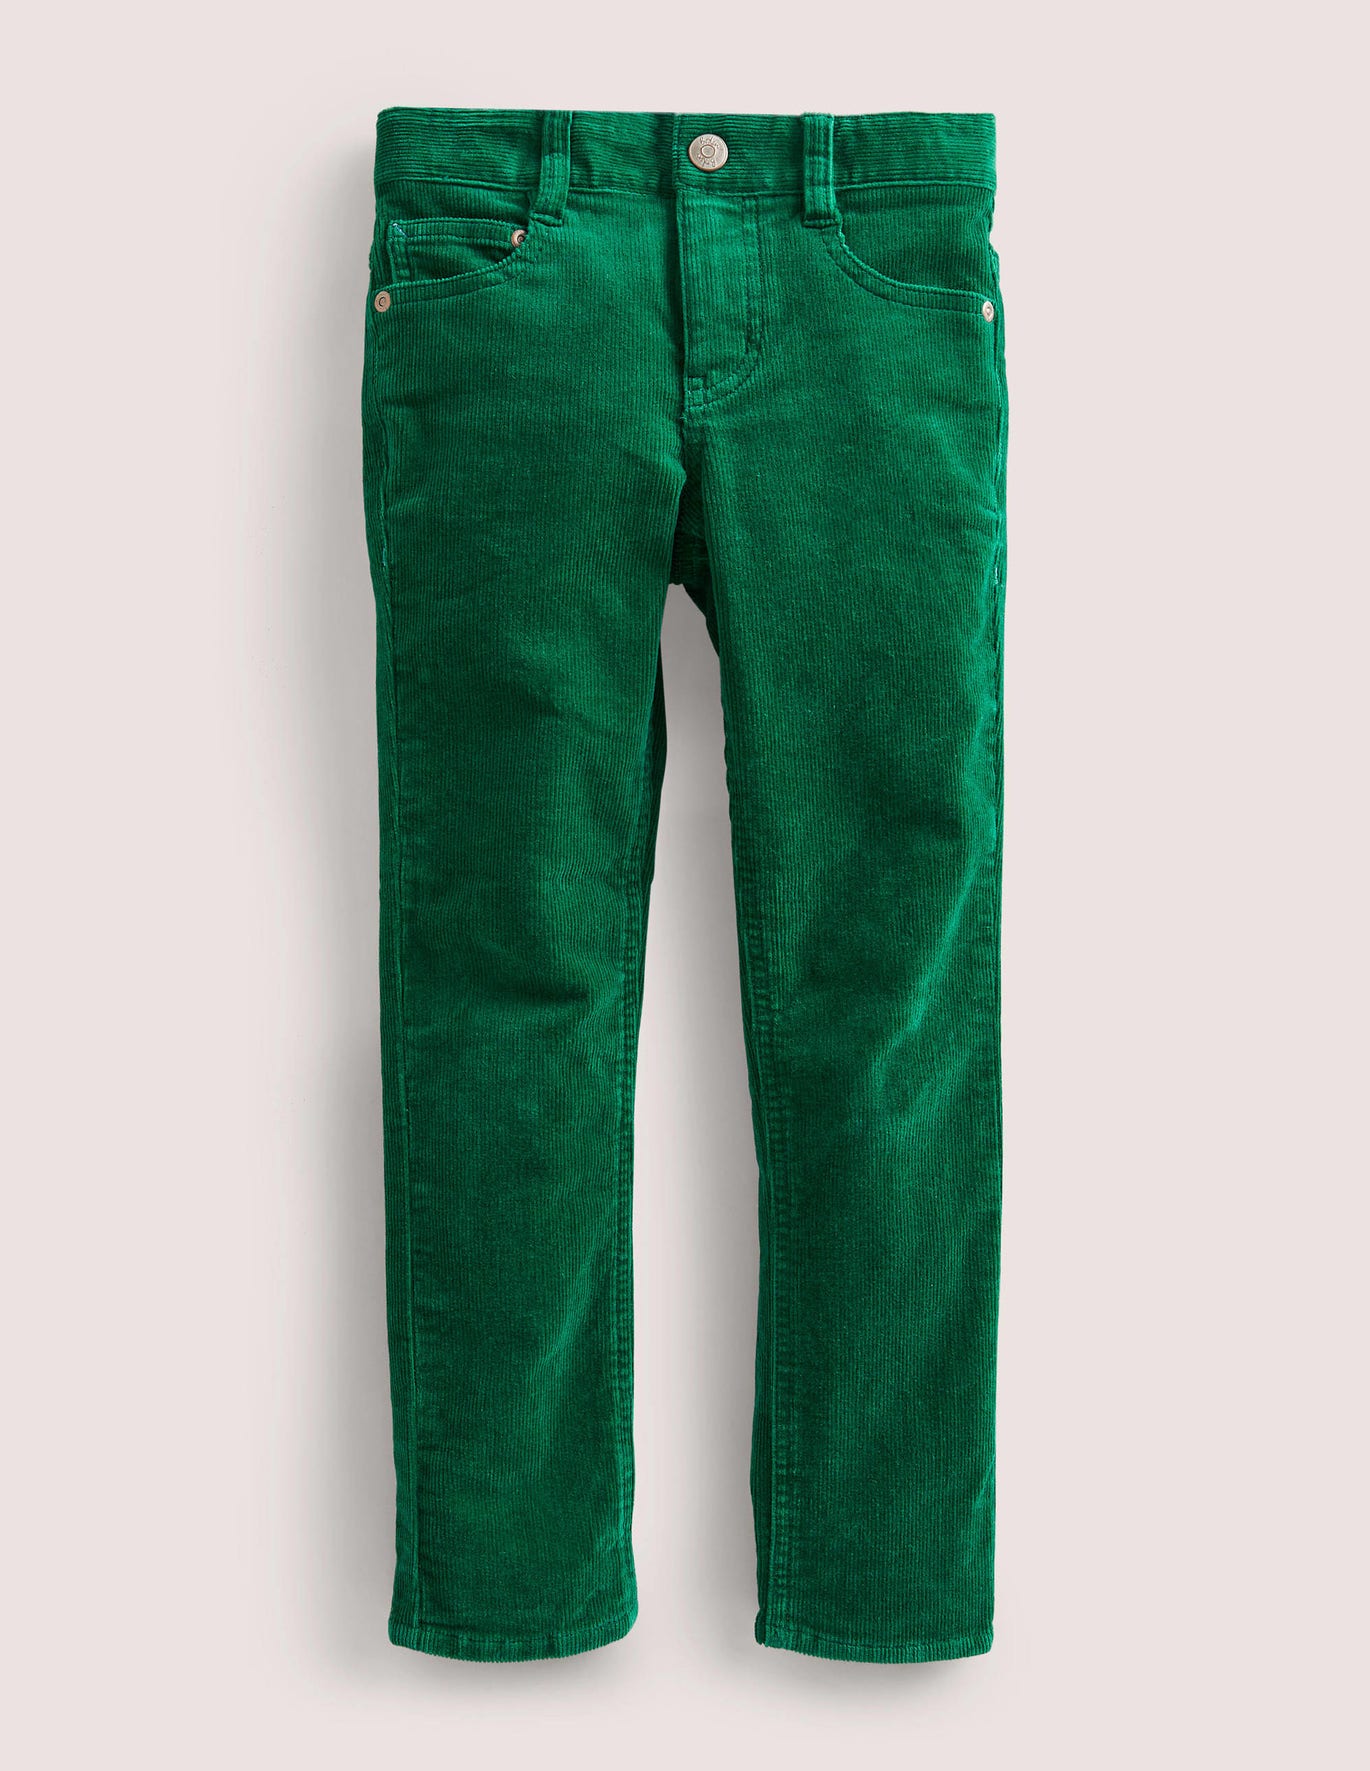 Boden Slim Cord Stretch Pants - Shady Green